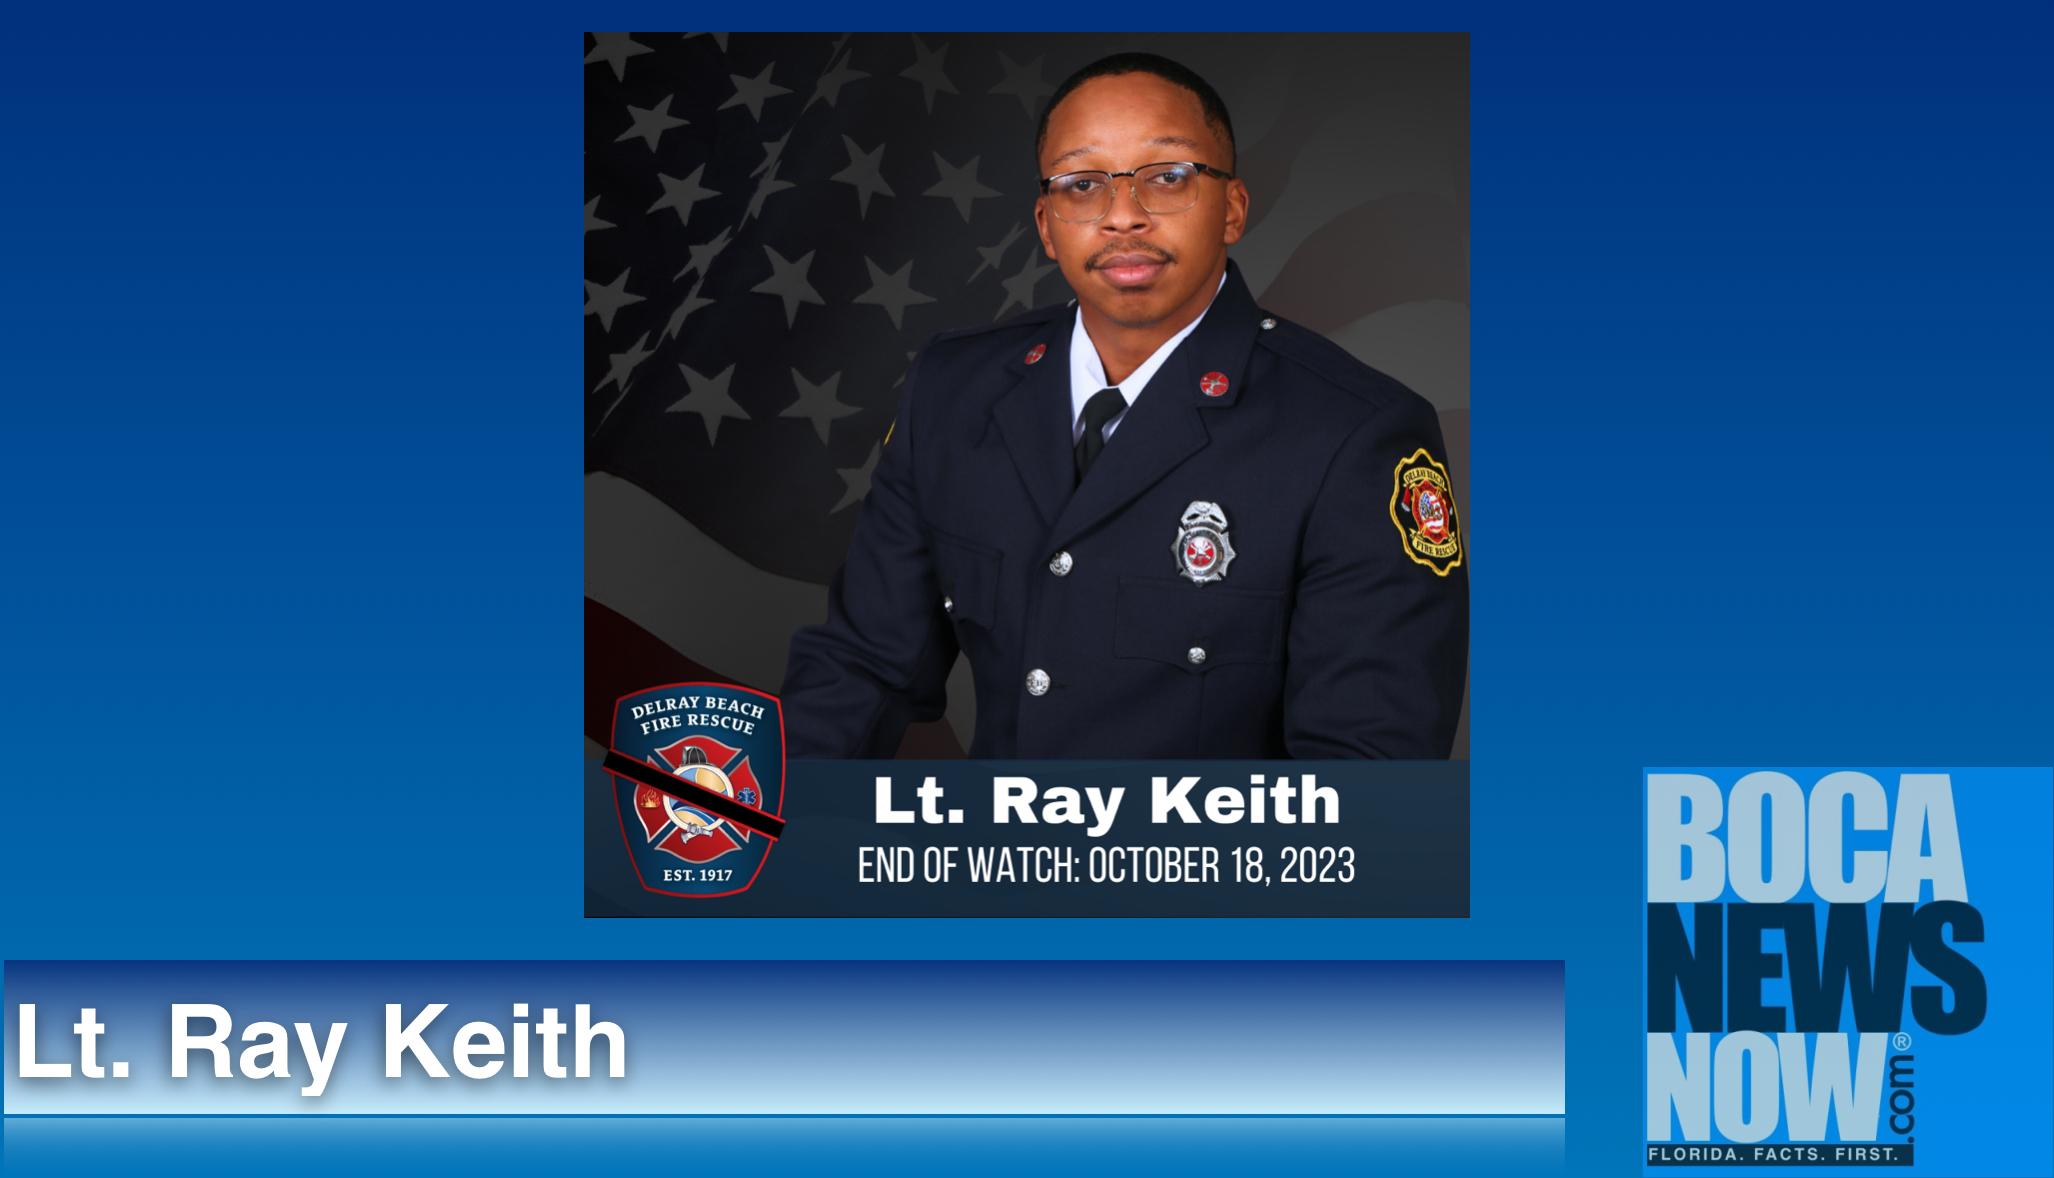 Lt. Ray Keith